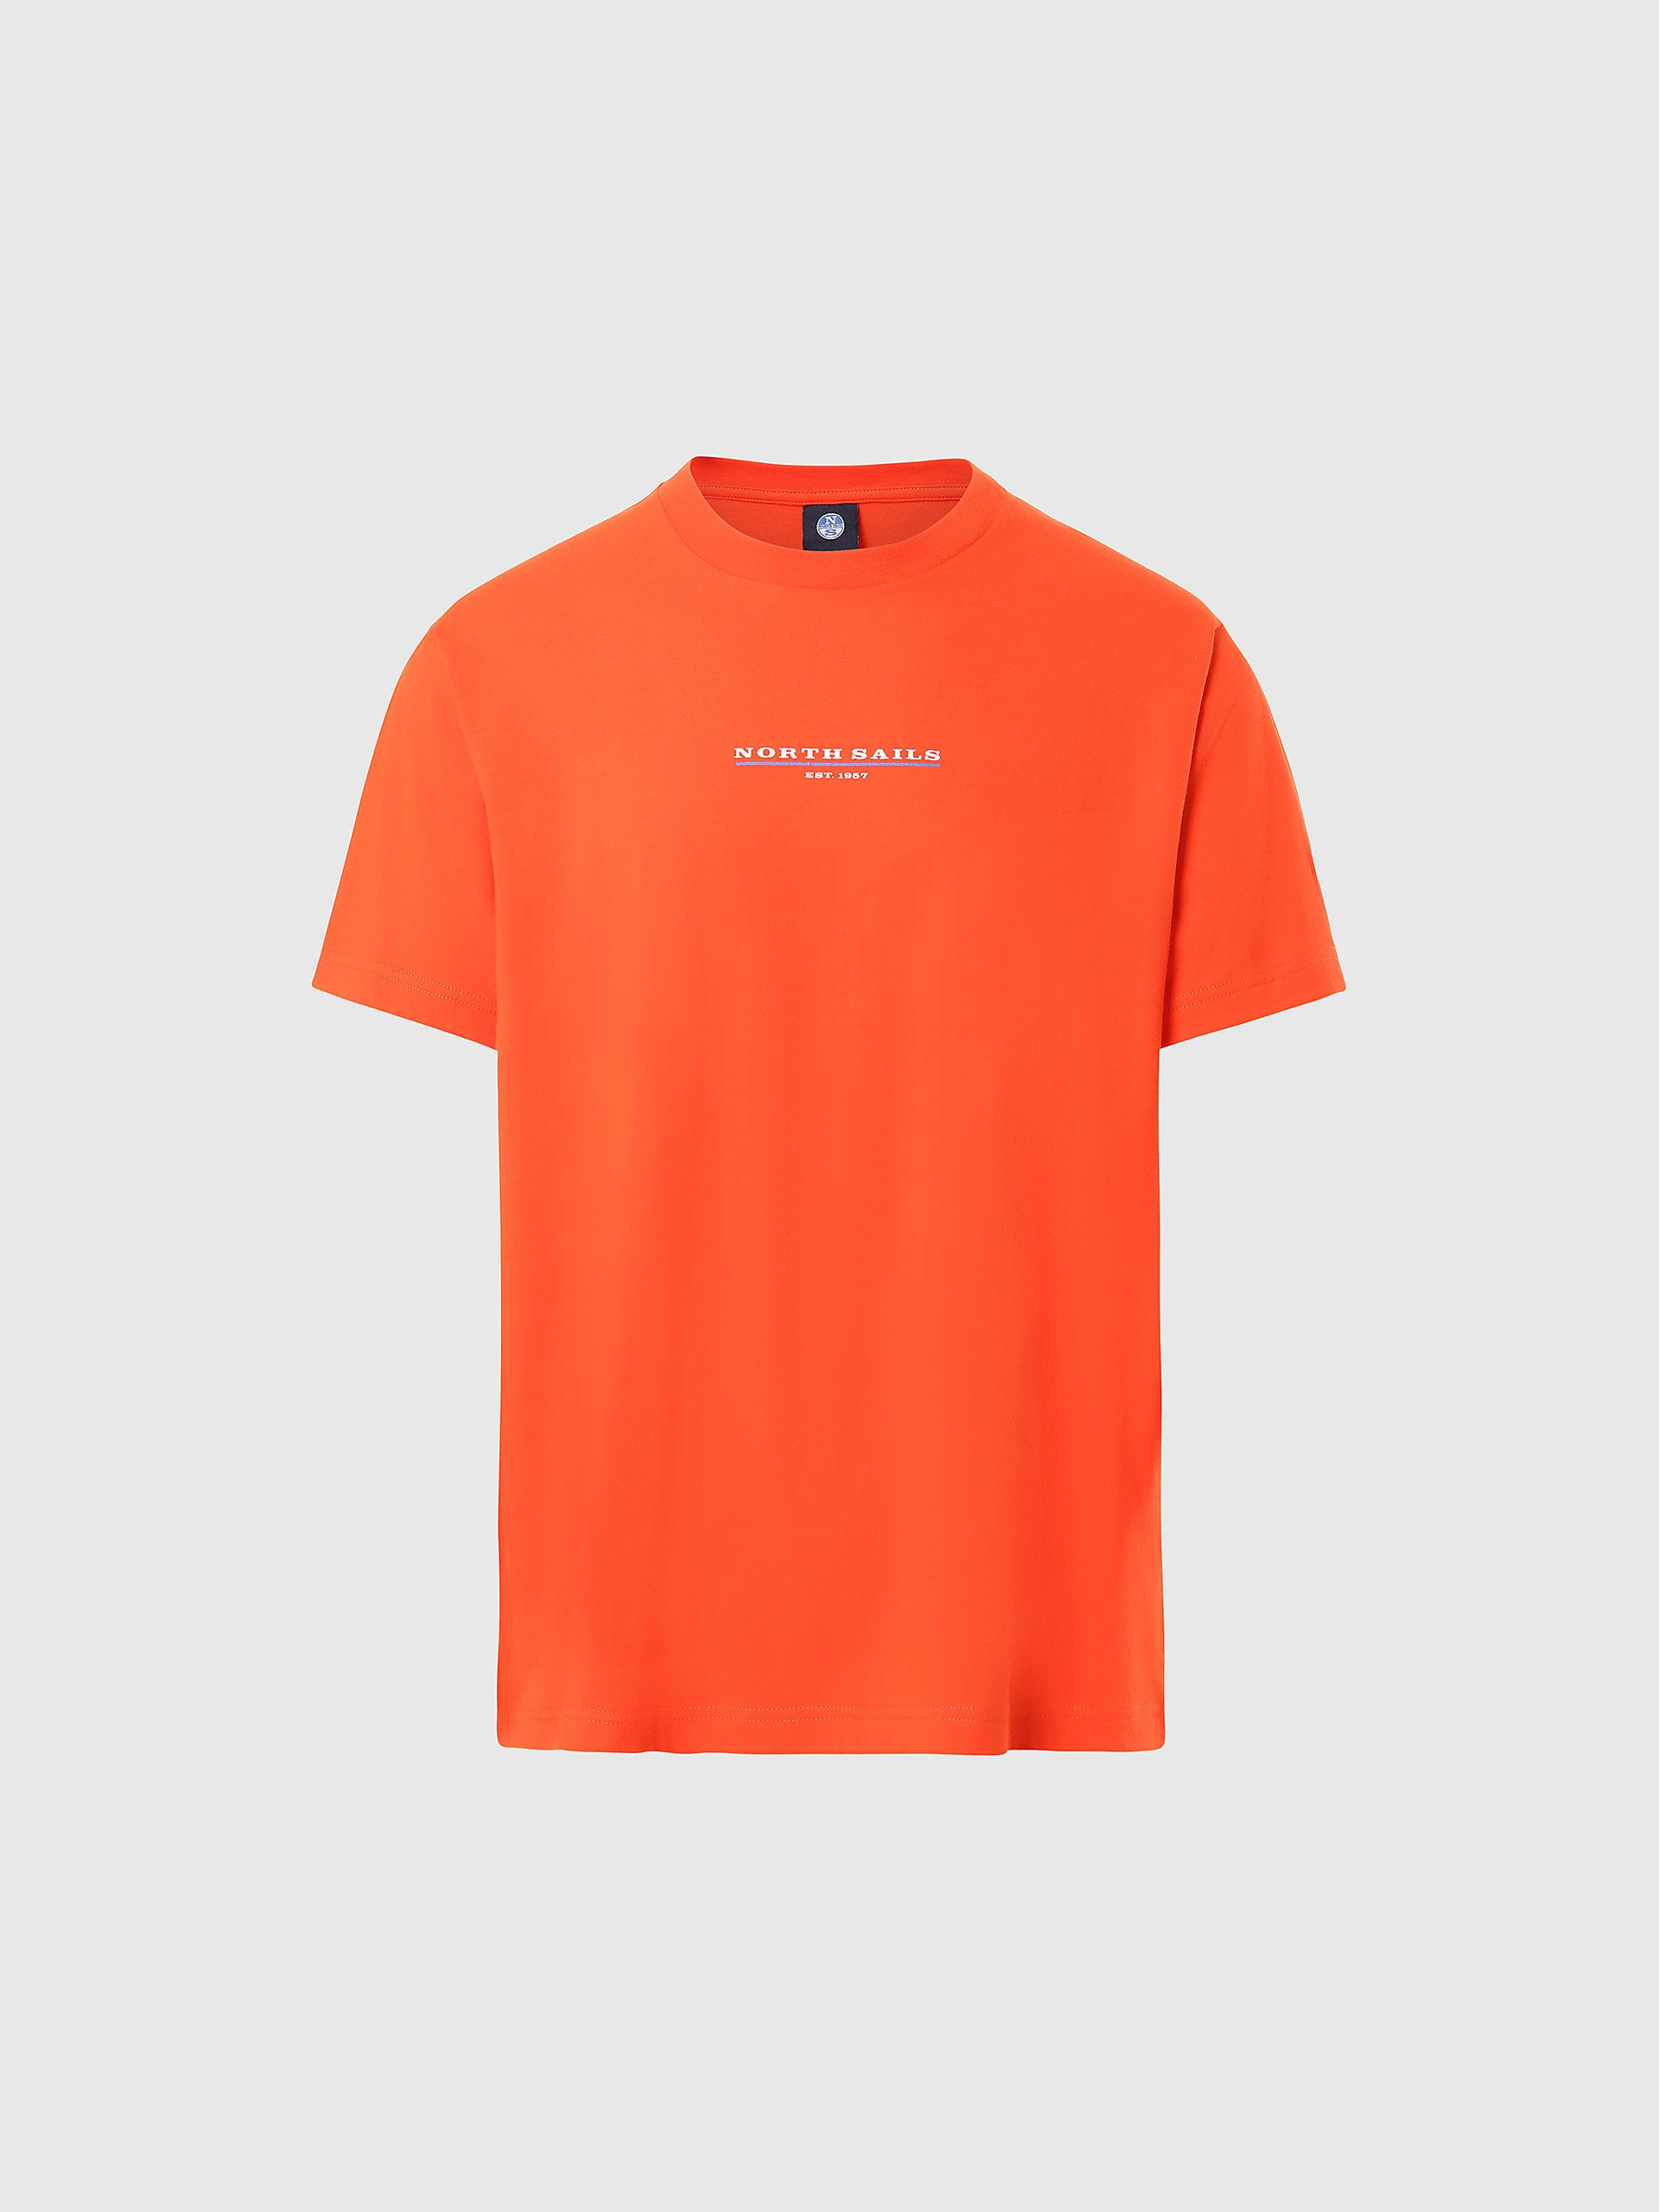 North Sails - T-shirt with chest printNorth SailsBright orangeS